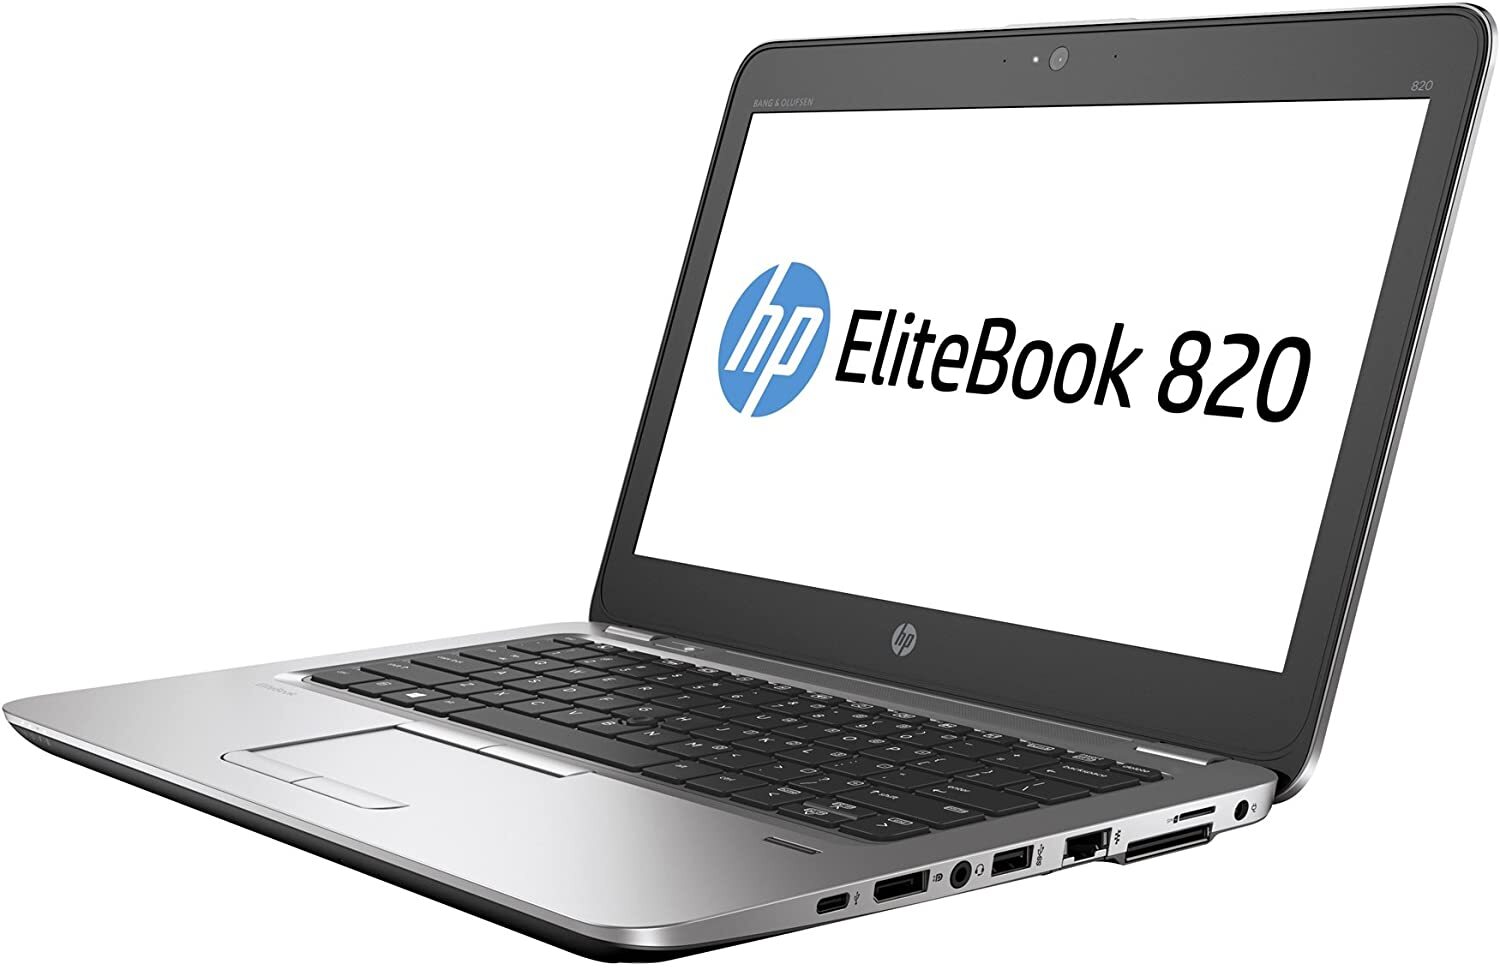 HP EliteBook 820 G3 Intel i5 6300U 2.40GHz 4GB RAM 500GB SSD 12.5" Win 10 Image 2